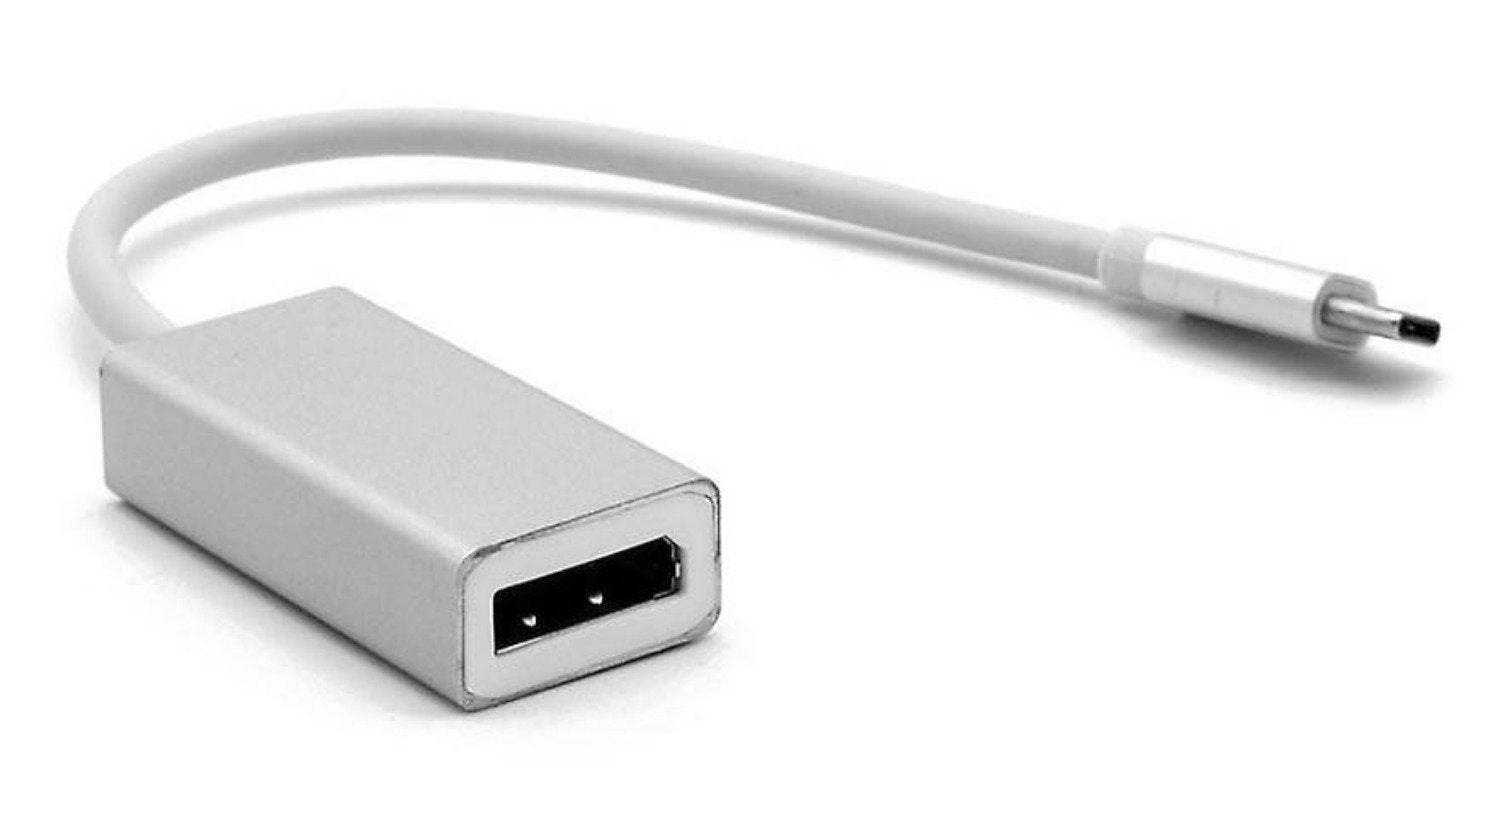 USB Type-C to DisplayPort(tm) Video Adapter (C-TC-DIS)